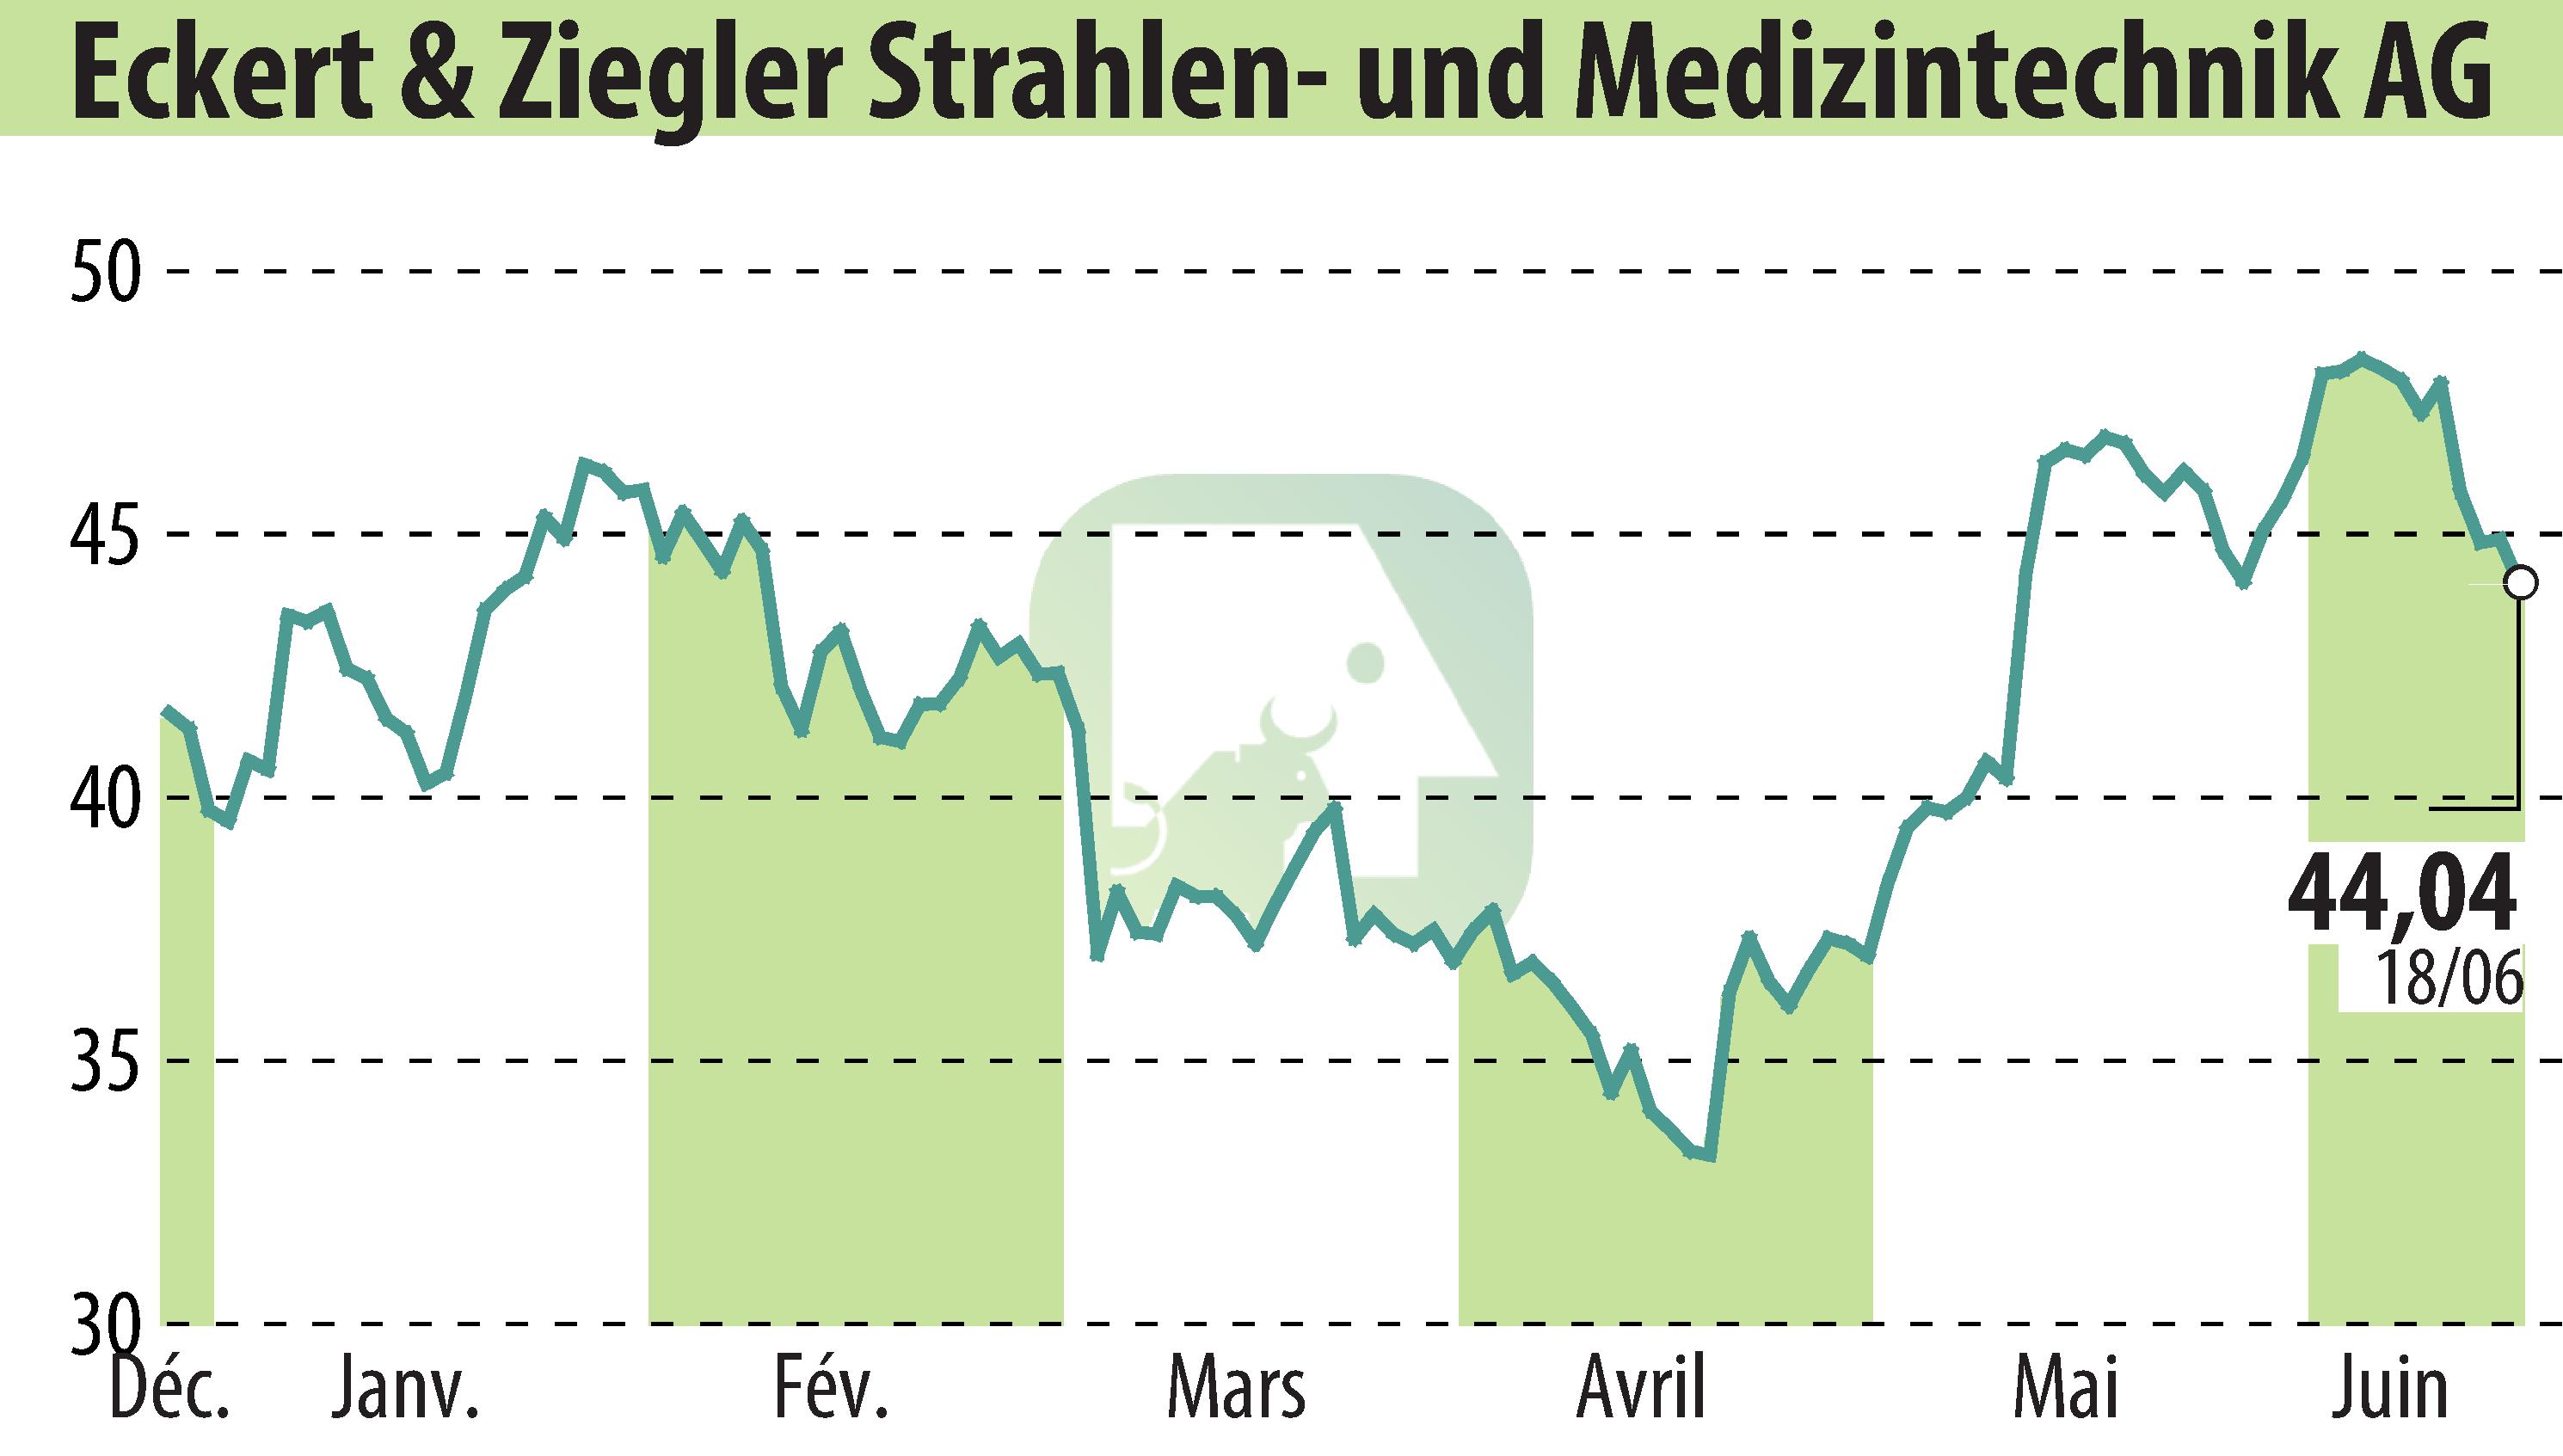 Stock price chart of Eckert & Ziegler Strahlen- Und Medizintechnik AG (EBR:EUZ) showing fluctuations.